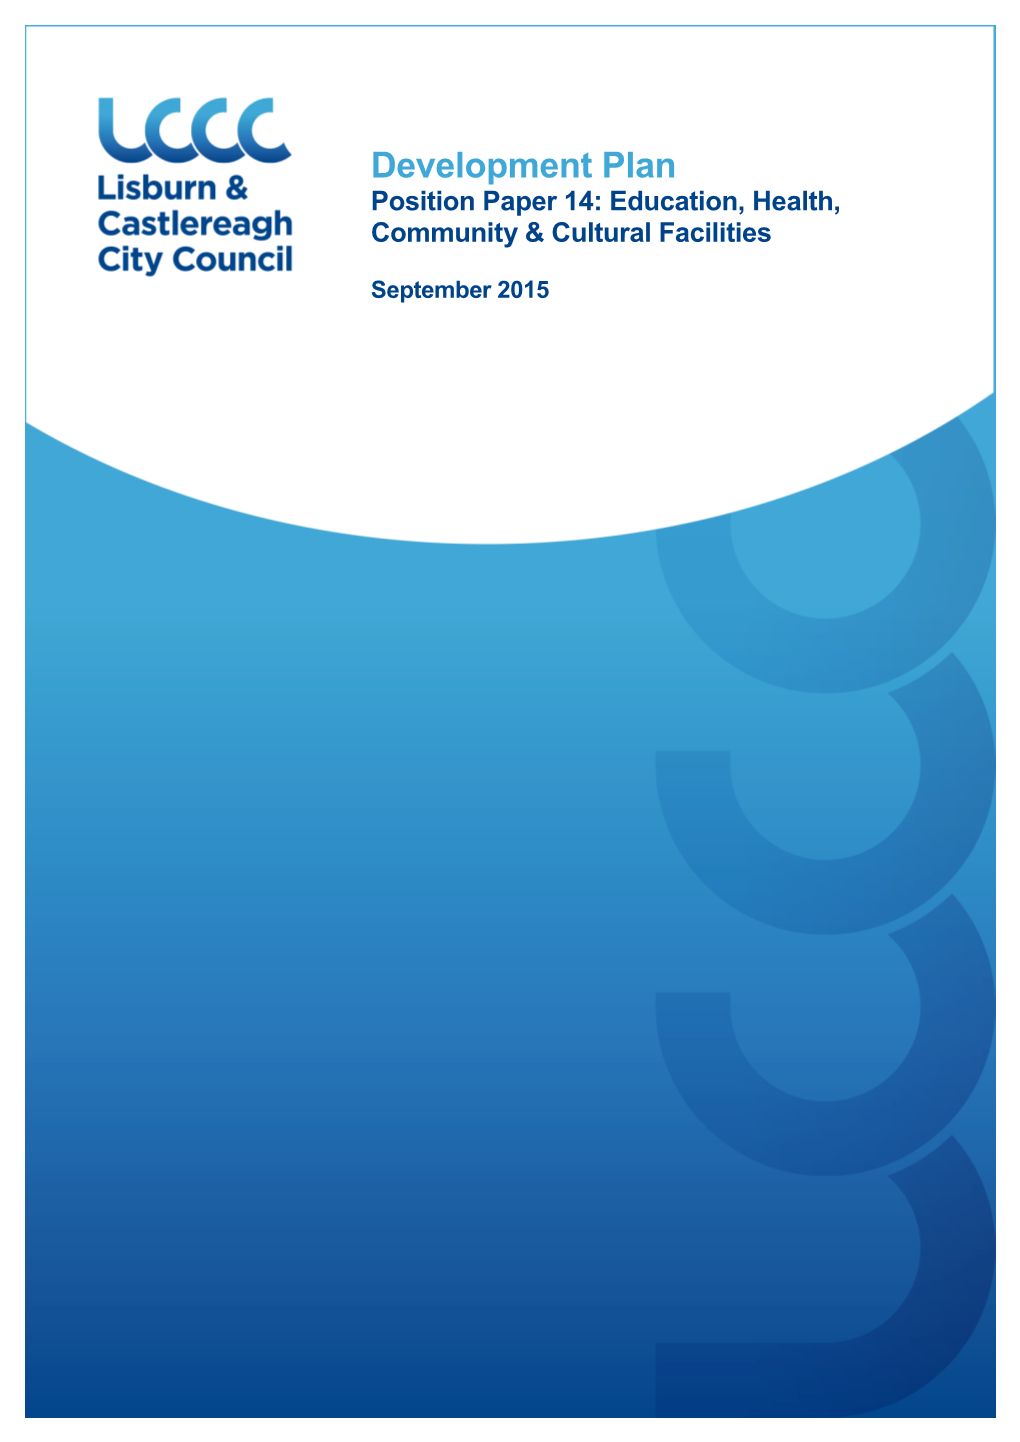 Development Plan Position Paper 14: Education, Health, Community & Cultural Facilities